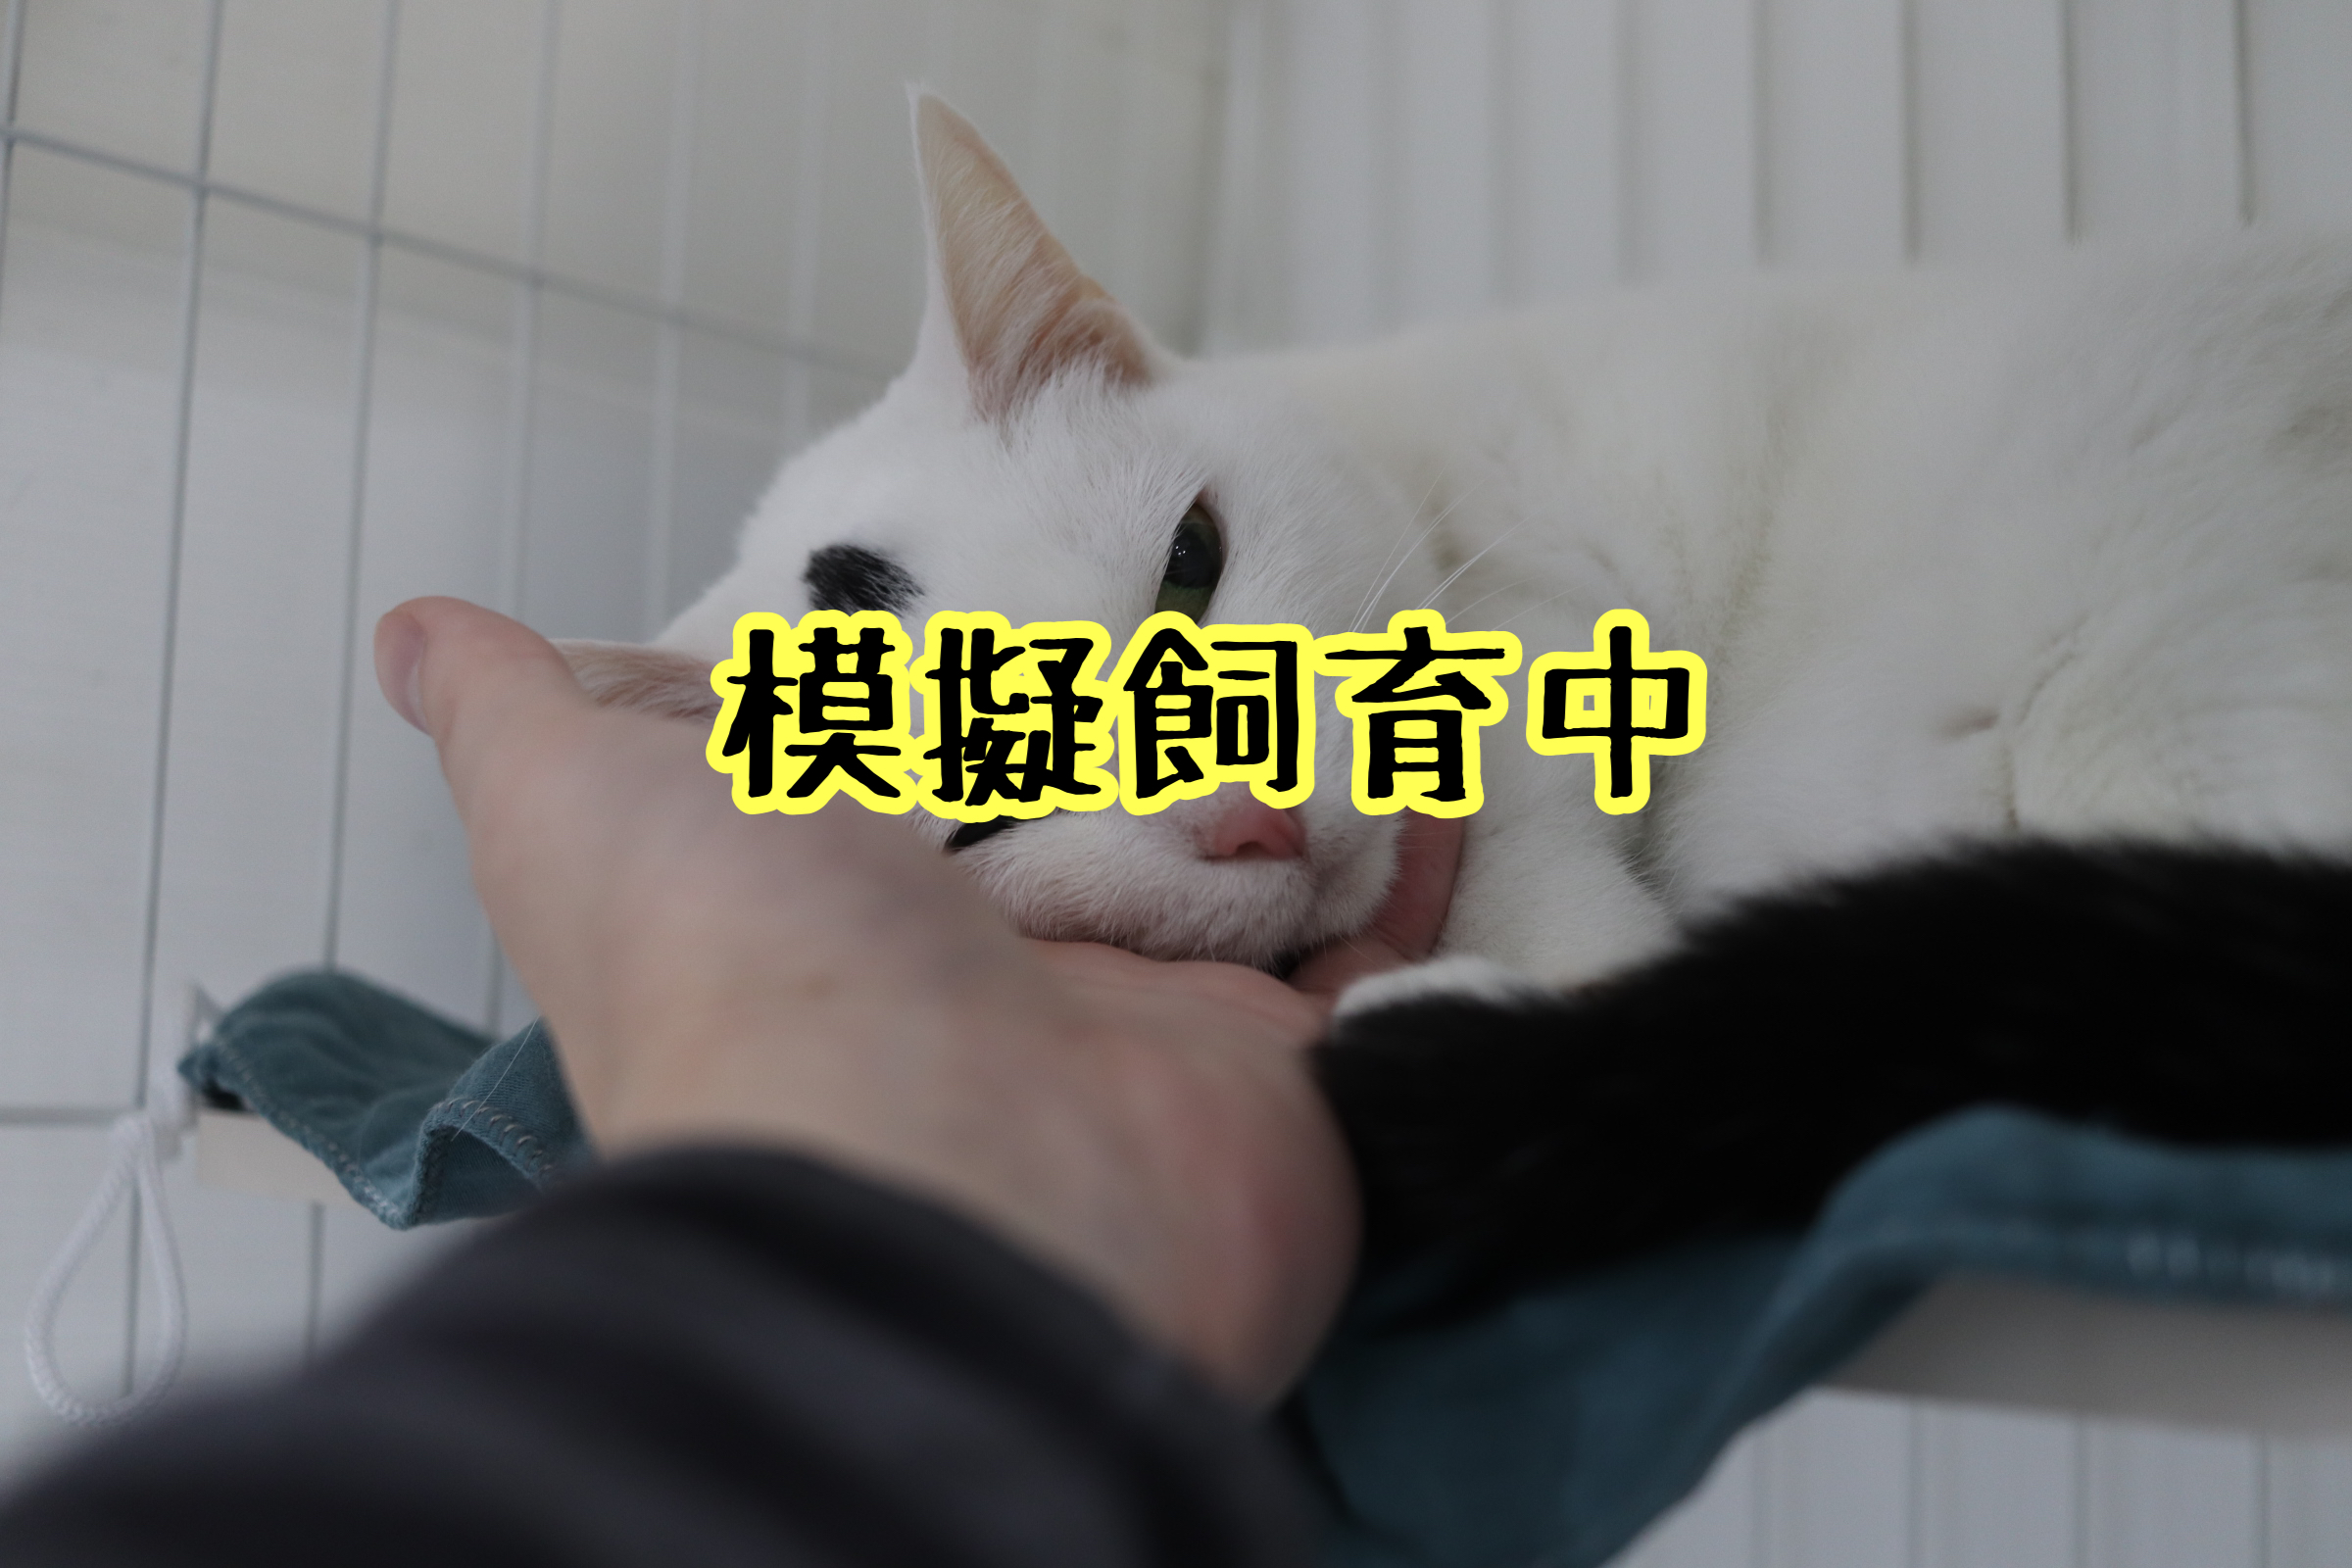 <ul>
<li>猫種：日本猫</li>
<li>名前（性別）：てん(女の子)</li>
<li>年齢：2011年6月頃生まれ</li>
<li>保護経緯：引越しのため飼育困難</li>
</ul>
